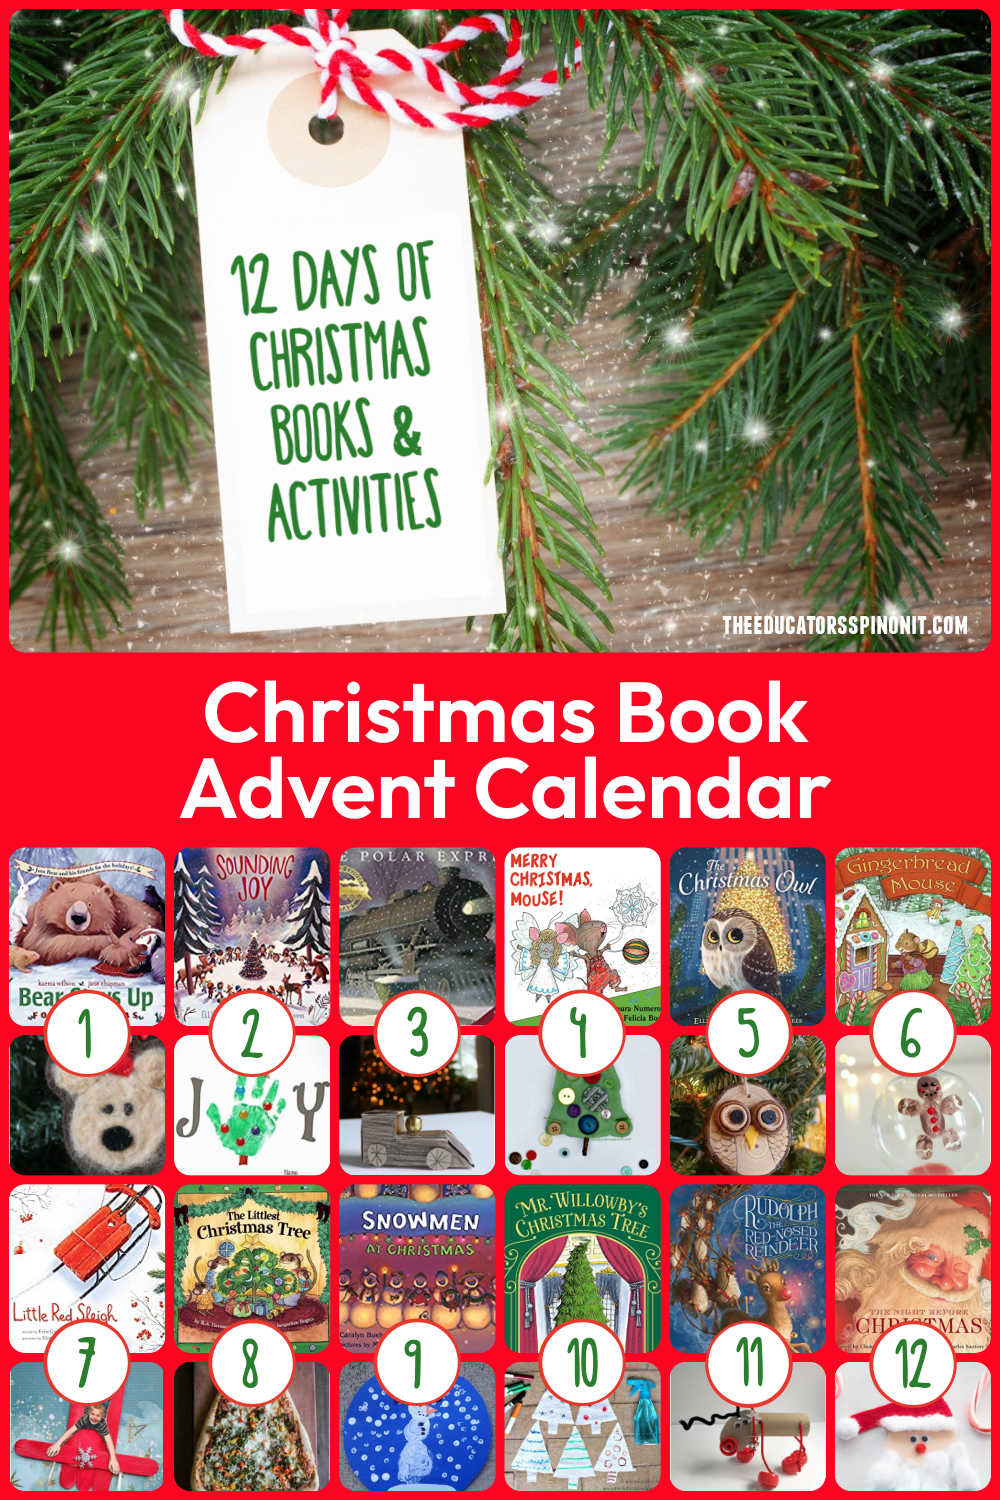 Christmas Book Advent Calendar for Kids!  12 Days of Christmas Books and Activities this holiday season. 